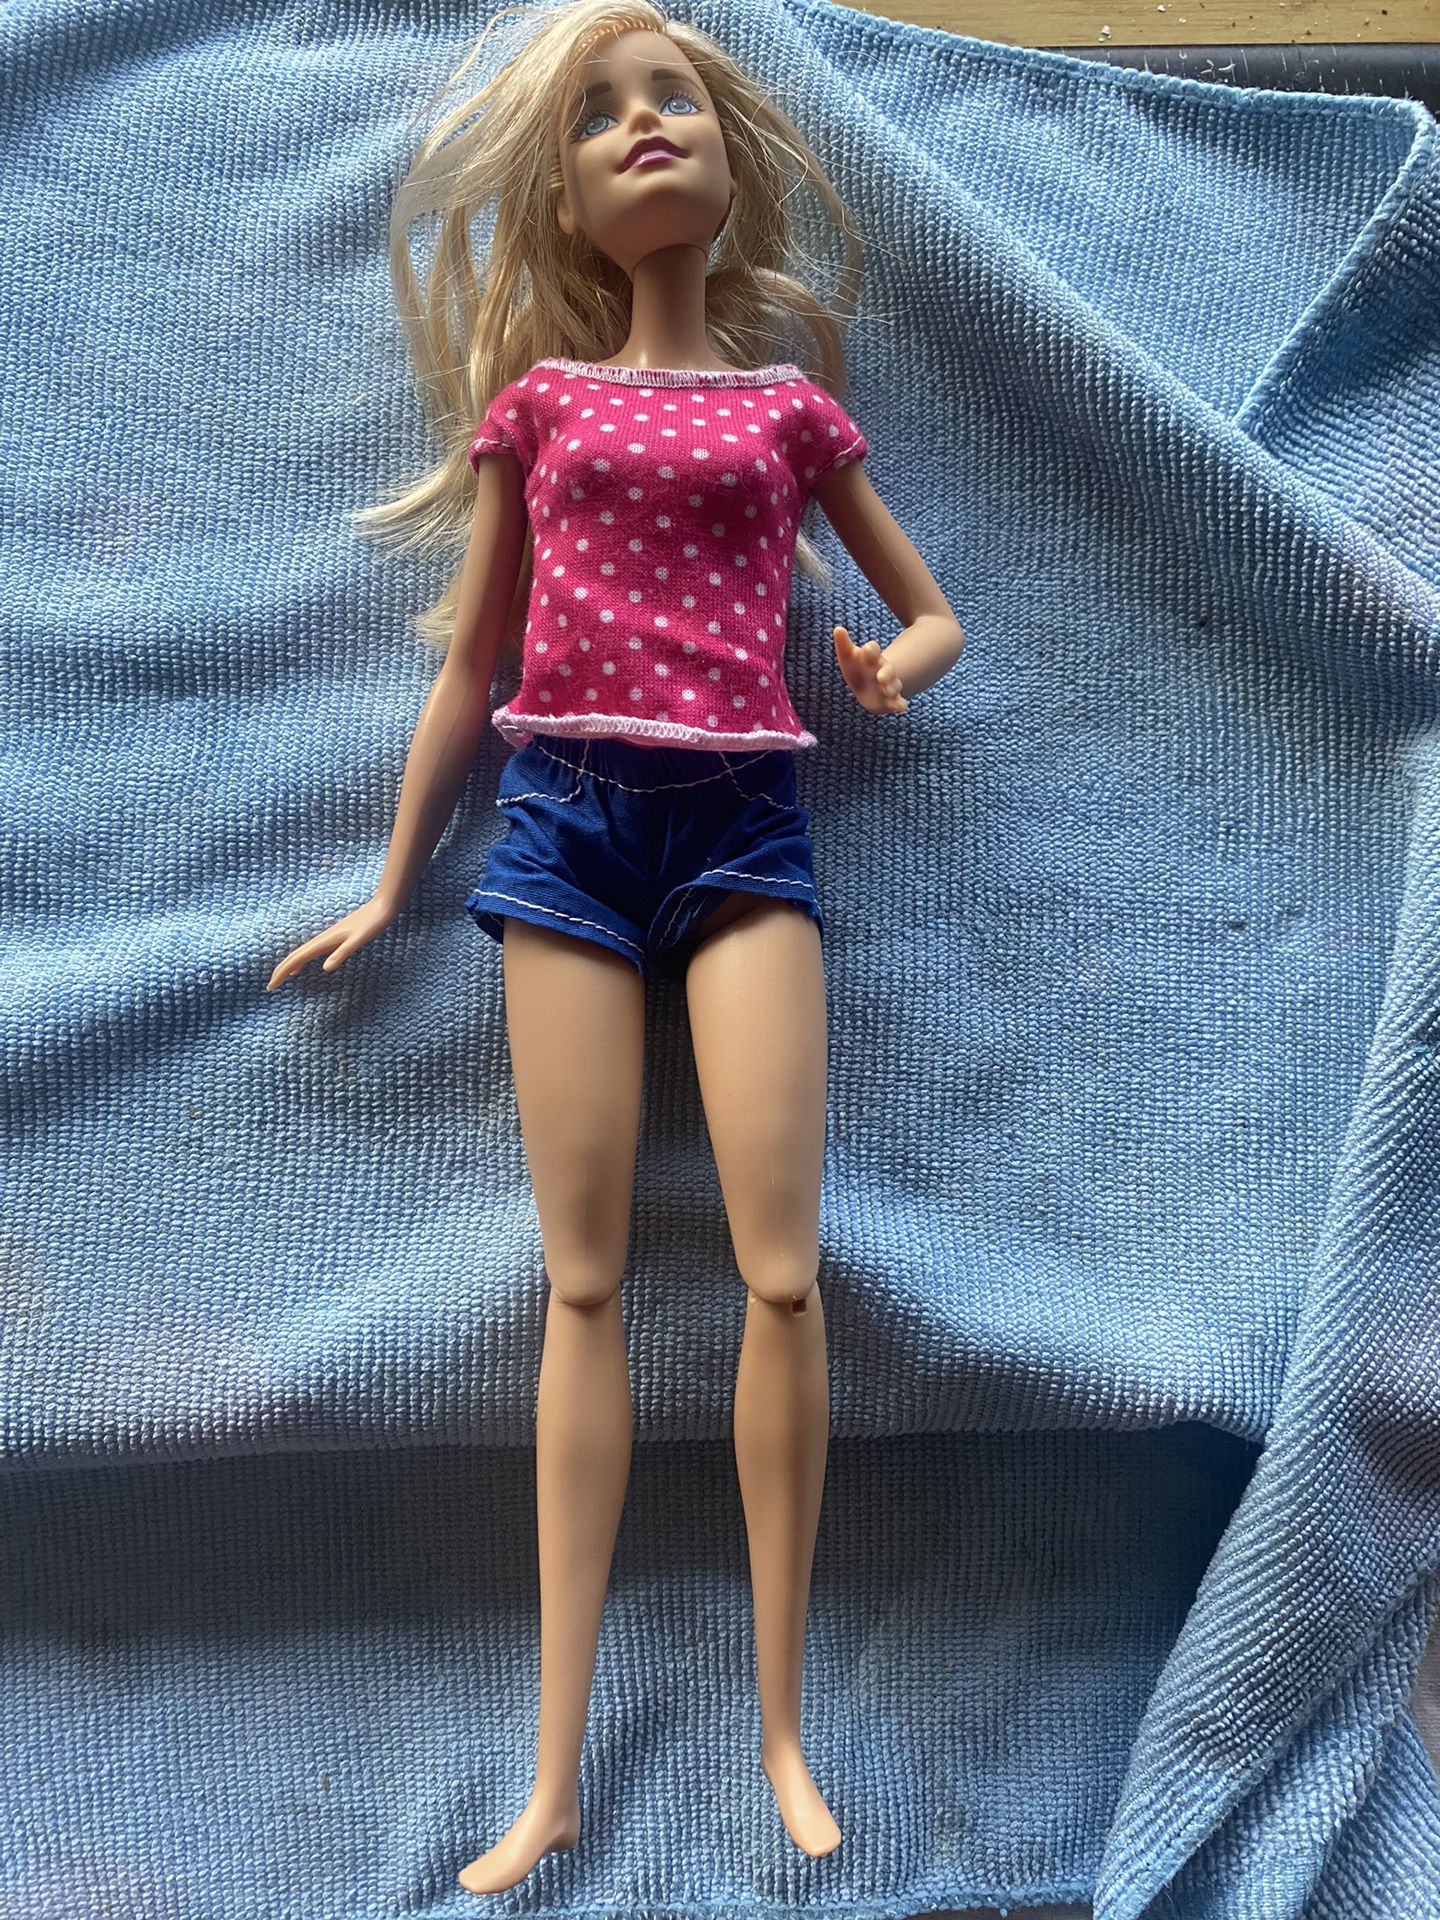 Barbie Fashion Doll 2013 Mattel, Polka Dot Top Denim Shorts